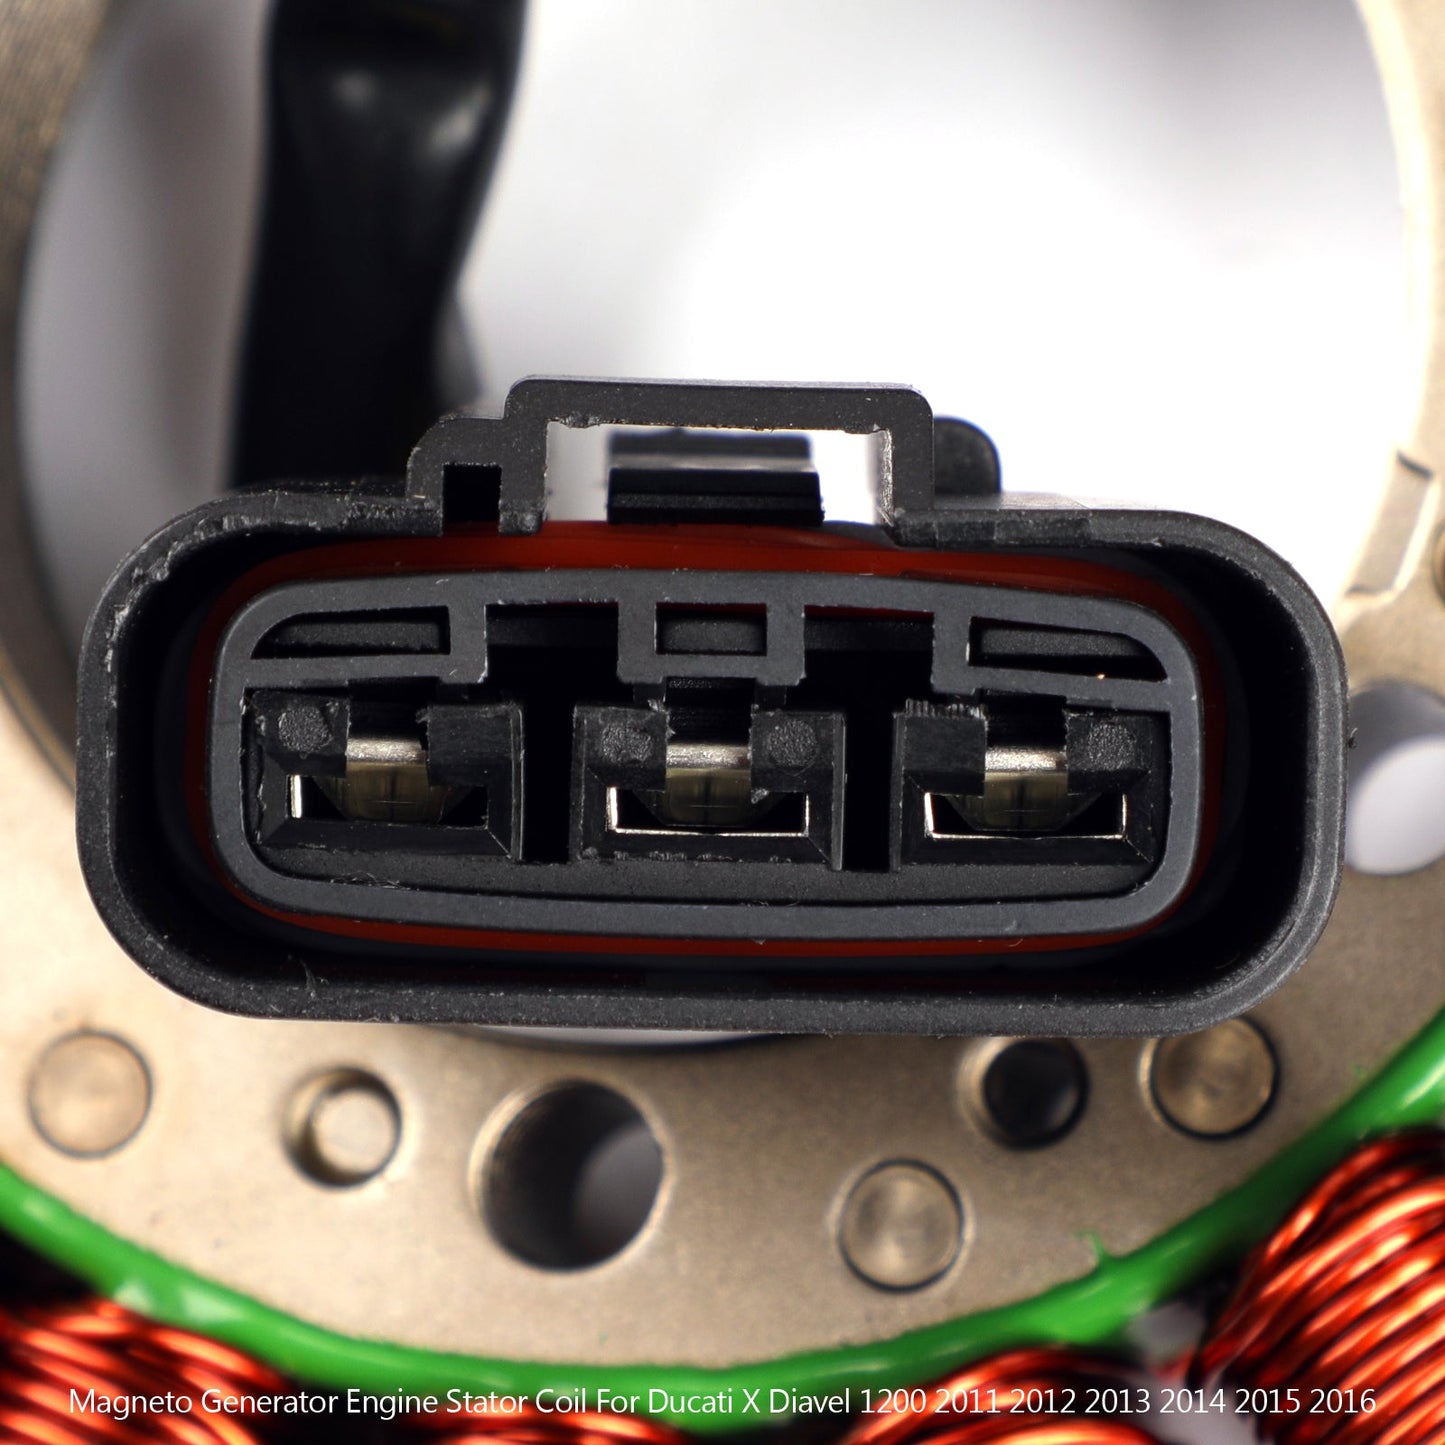 Magnetogenerator Motorstockspule für Ducati Diavel 1200 Carbon Cromo AMG 11-13